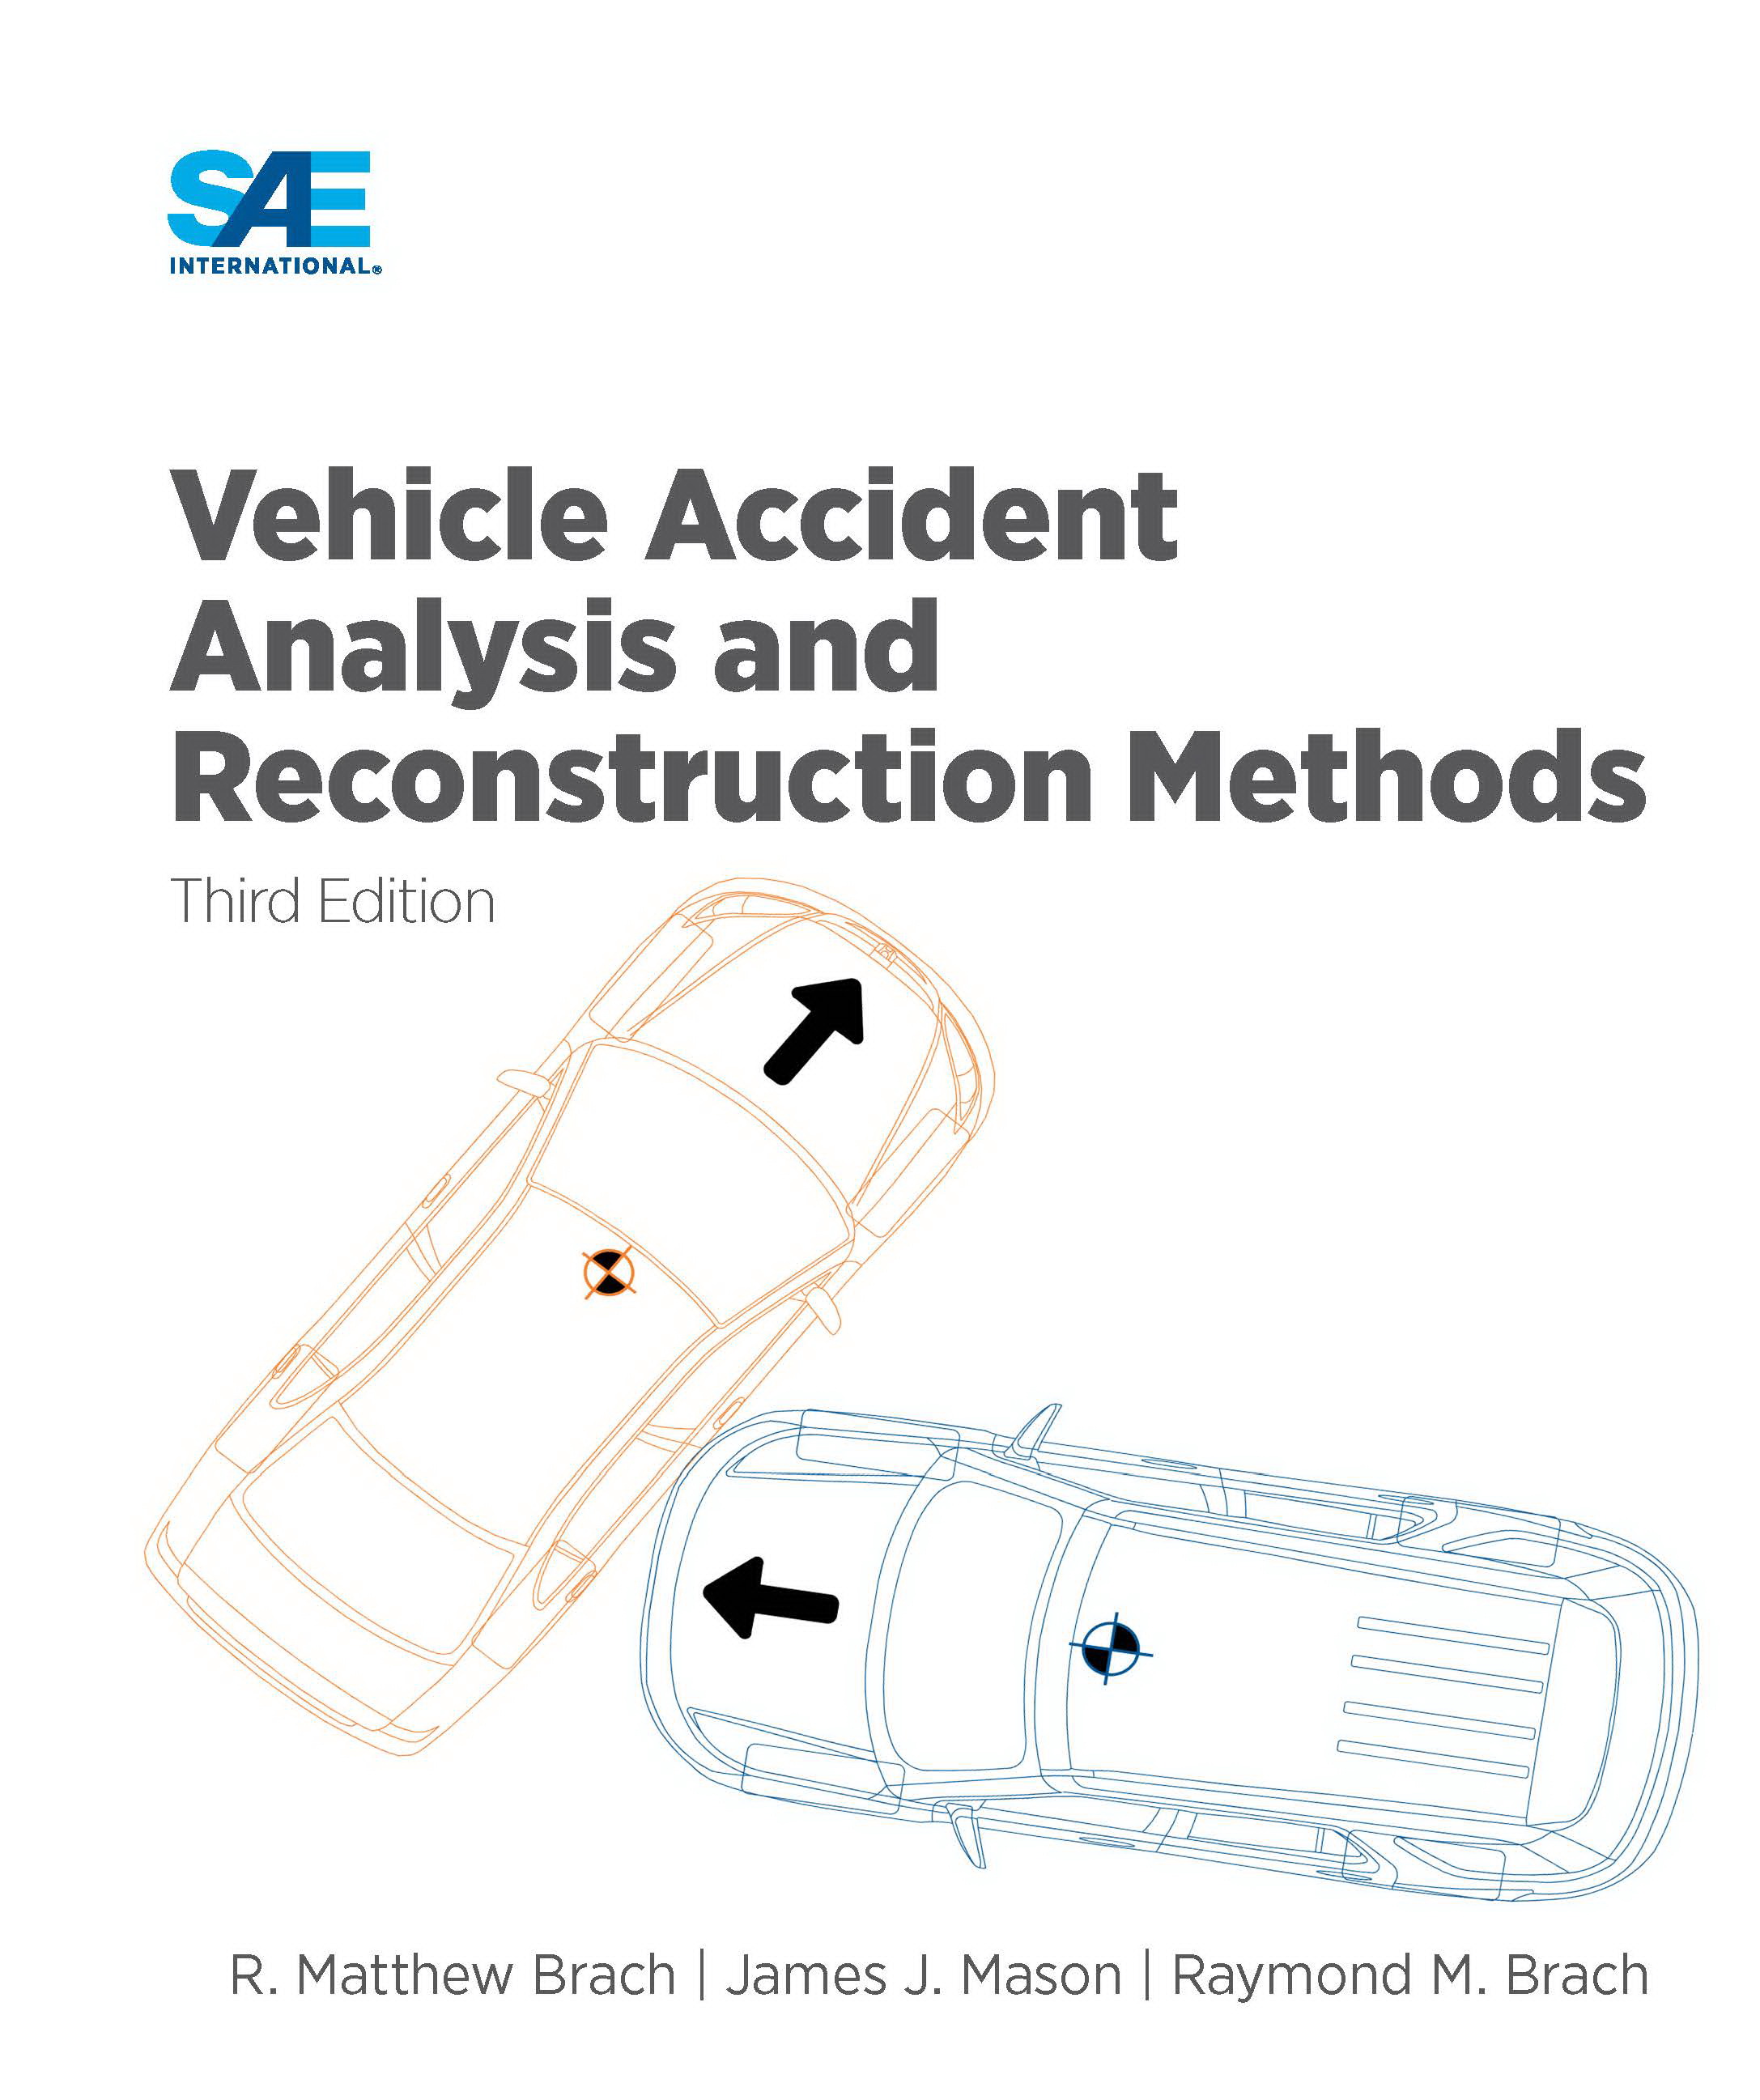 Vehicle Accident Analysis and Reconstruction Methods, Third Edition, By: R. Matthew Brach, James J. Mason, Raymond M. Brach, 2022.